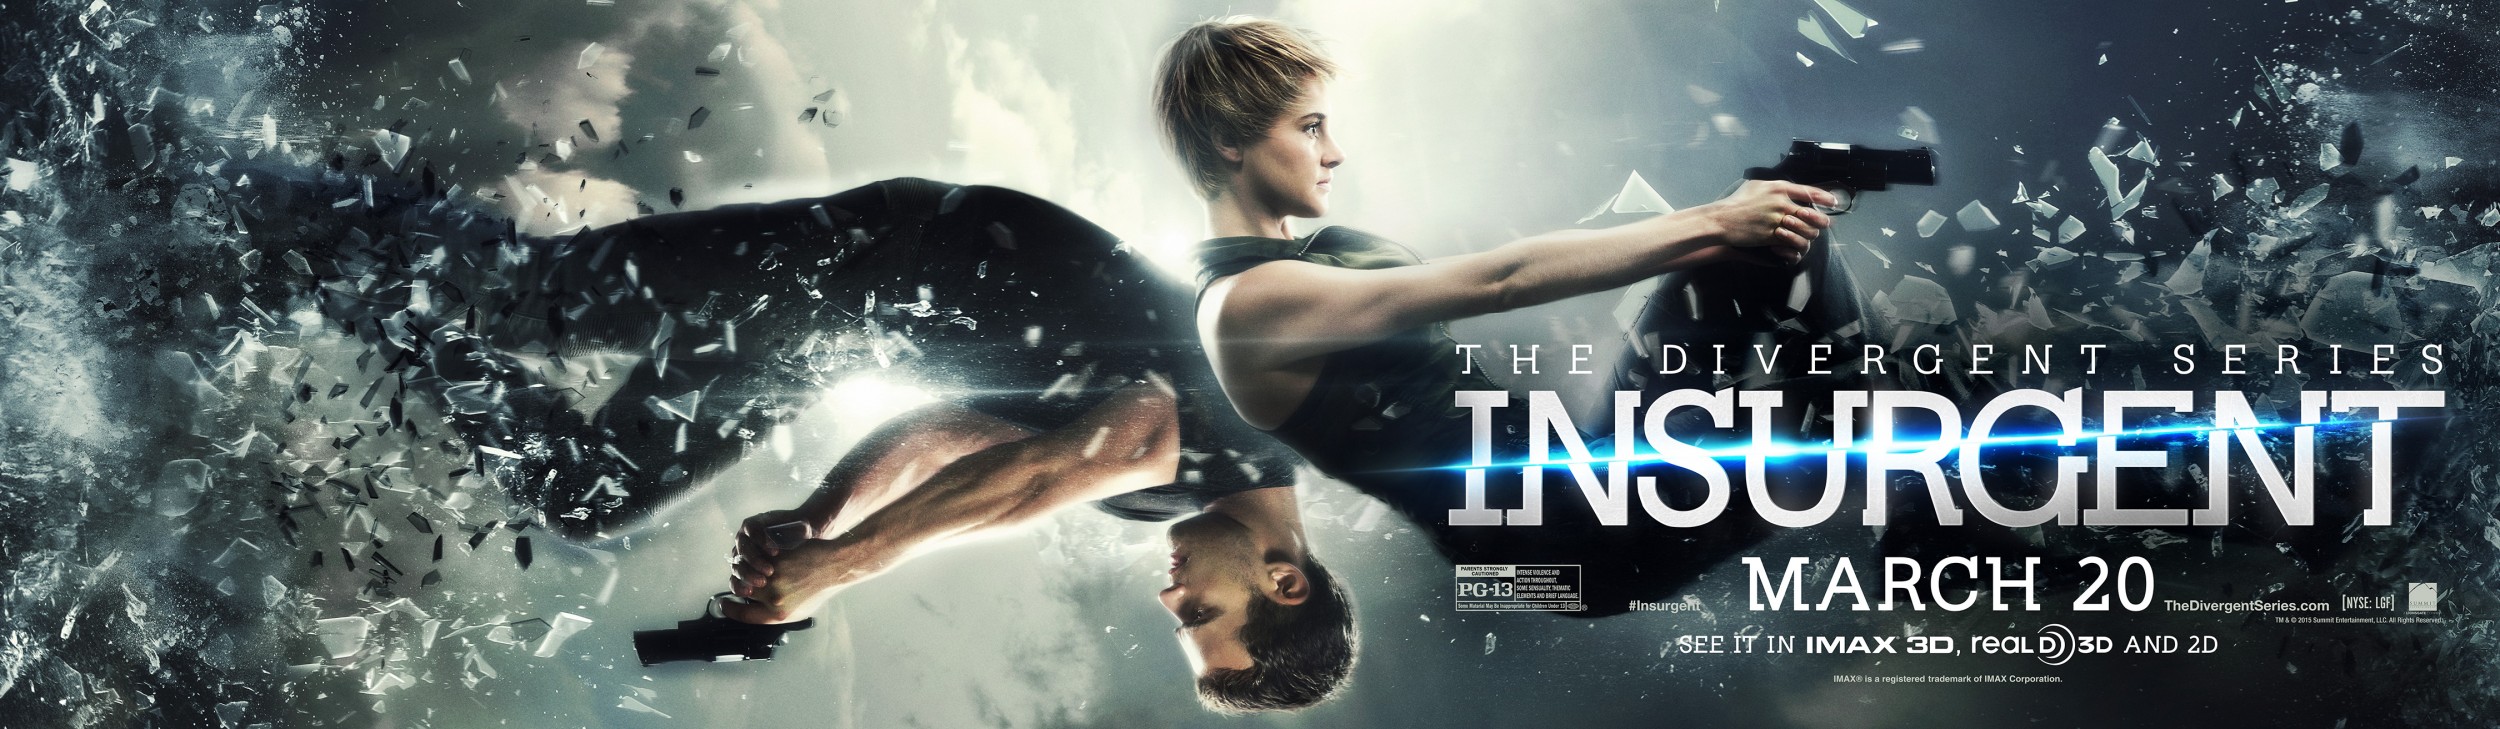 Mega Sized Movie Poster Image for Insurgent (#27 of 27)